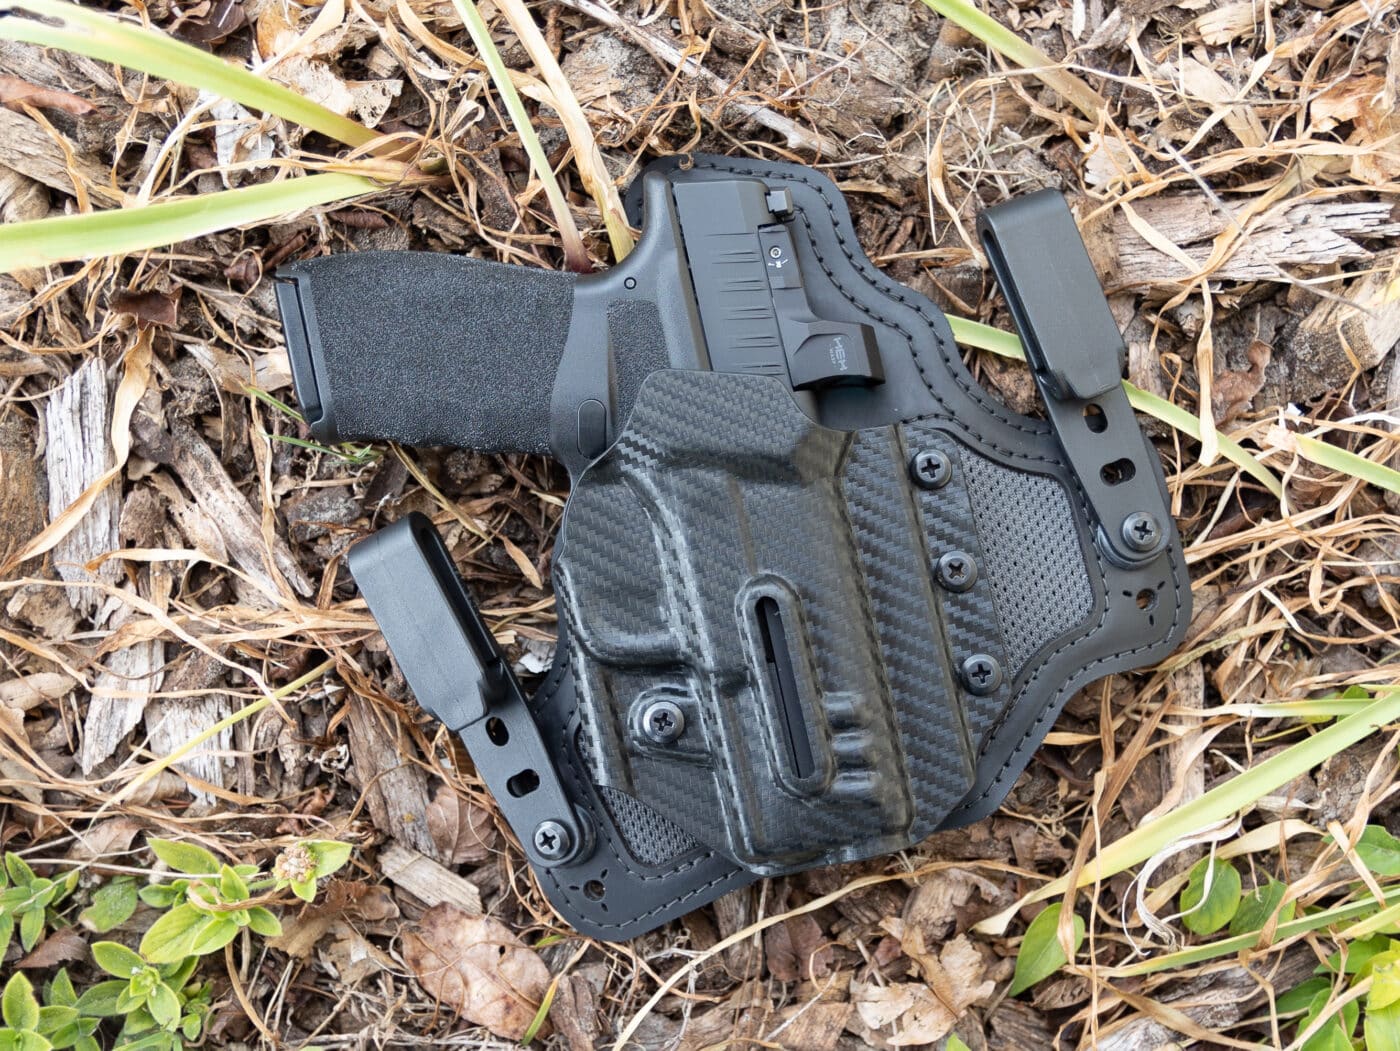 Black Arch Protos-M holster with Hellcat Pro pistol inside